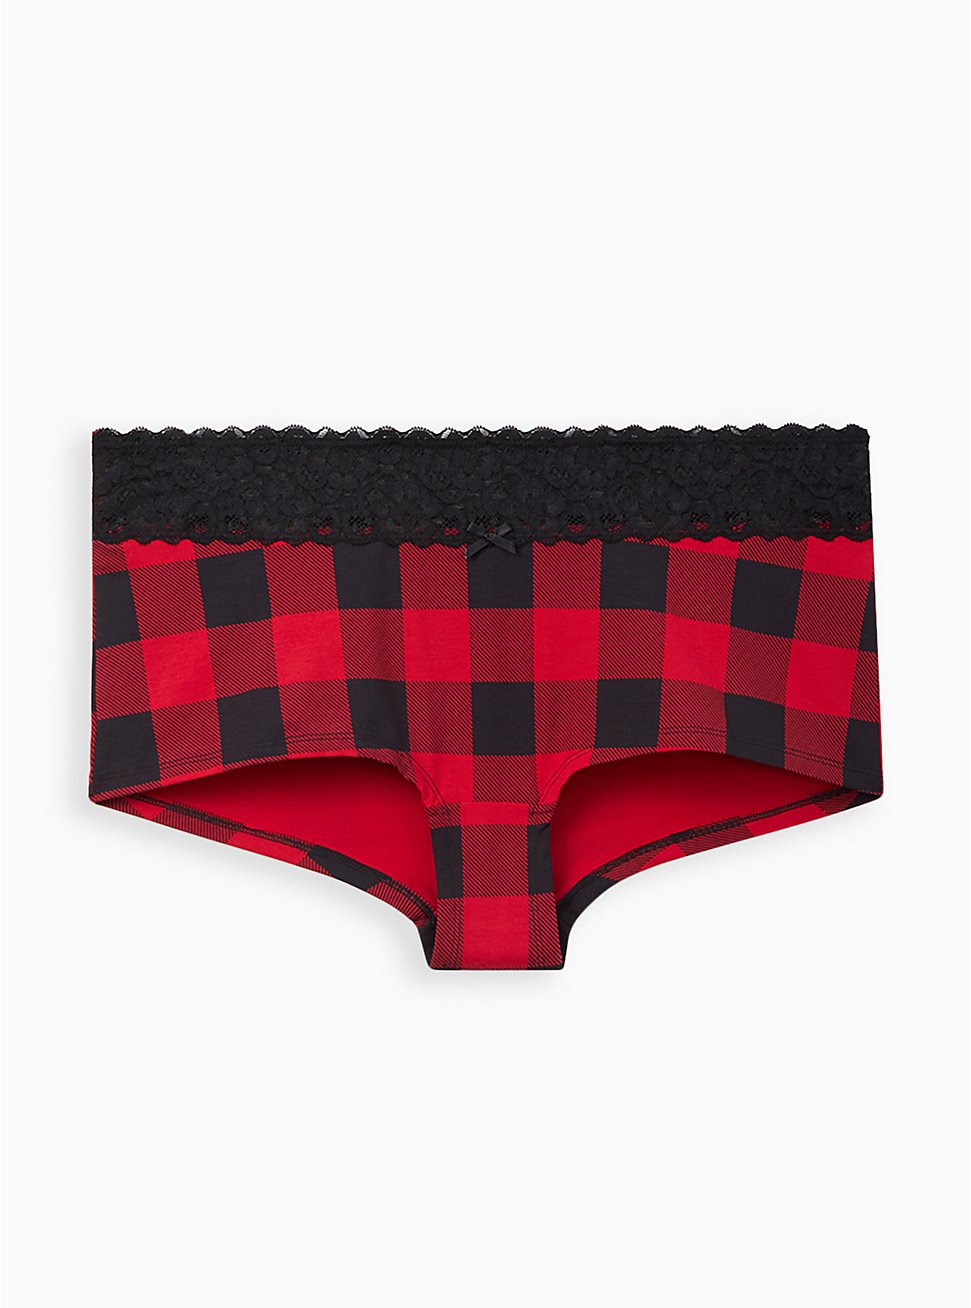 Wide Lace Trim Boyshort Panty - Cotton Buffalo Plaid Black & Red, BUFFALO CHECK, hi-res